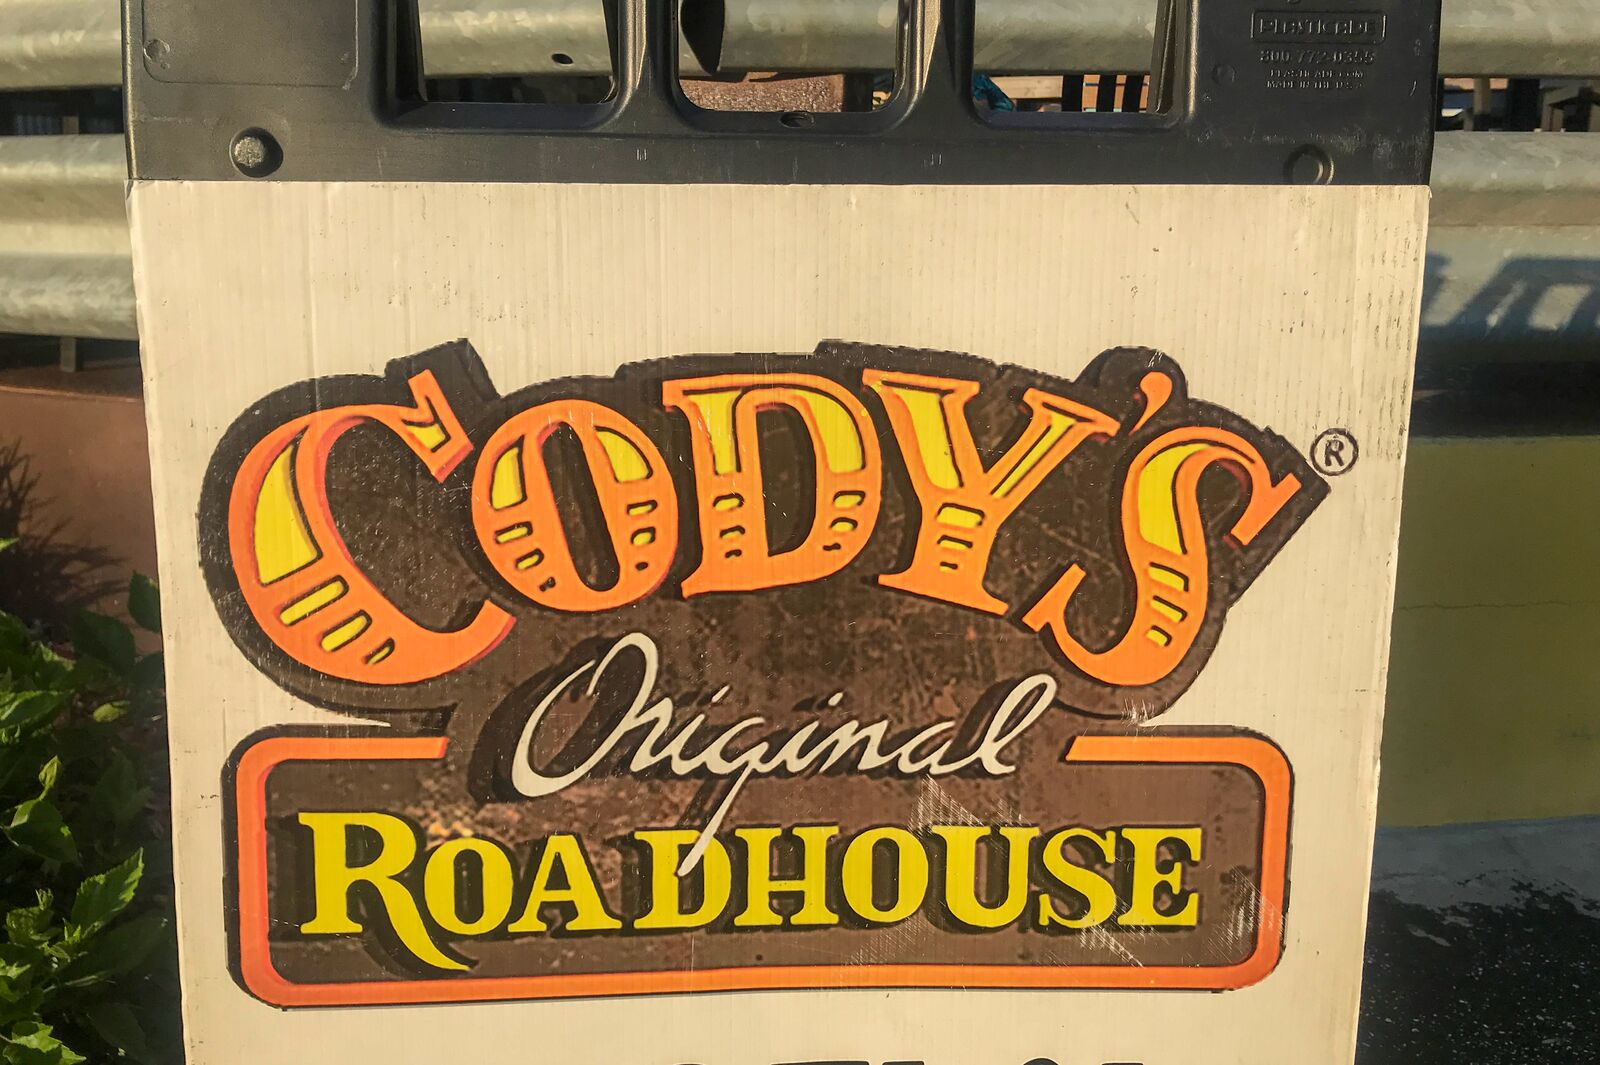 Cody's Original Roadhouse in Crystal River